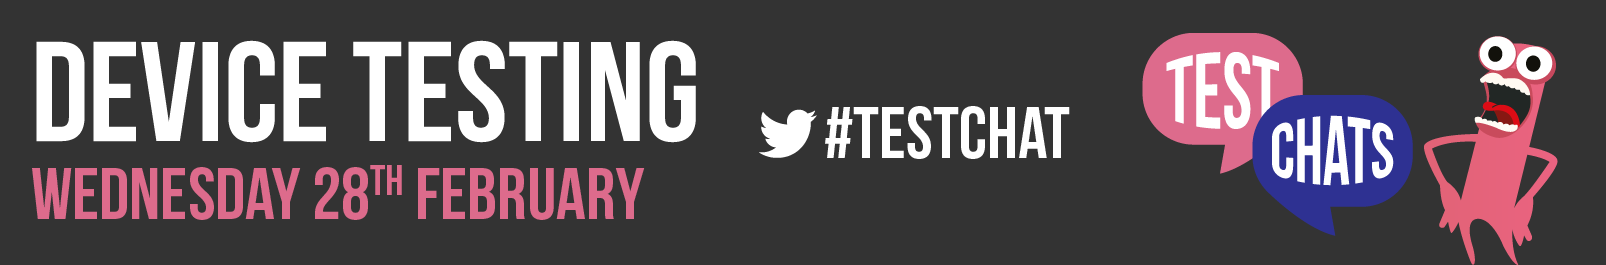 #TestChat - Device Testing banner image